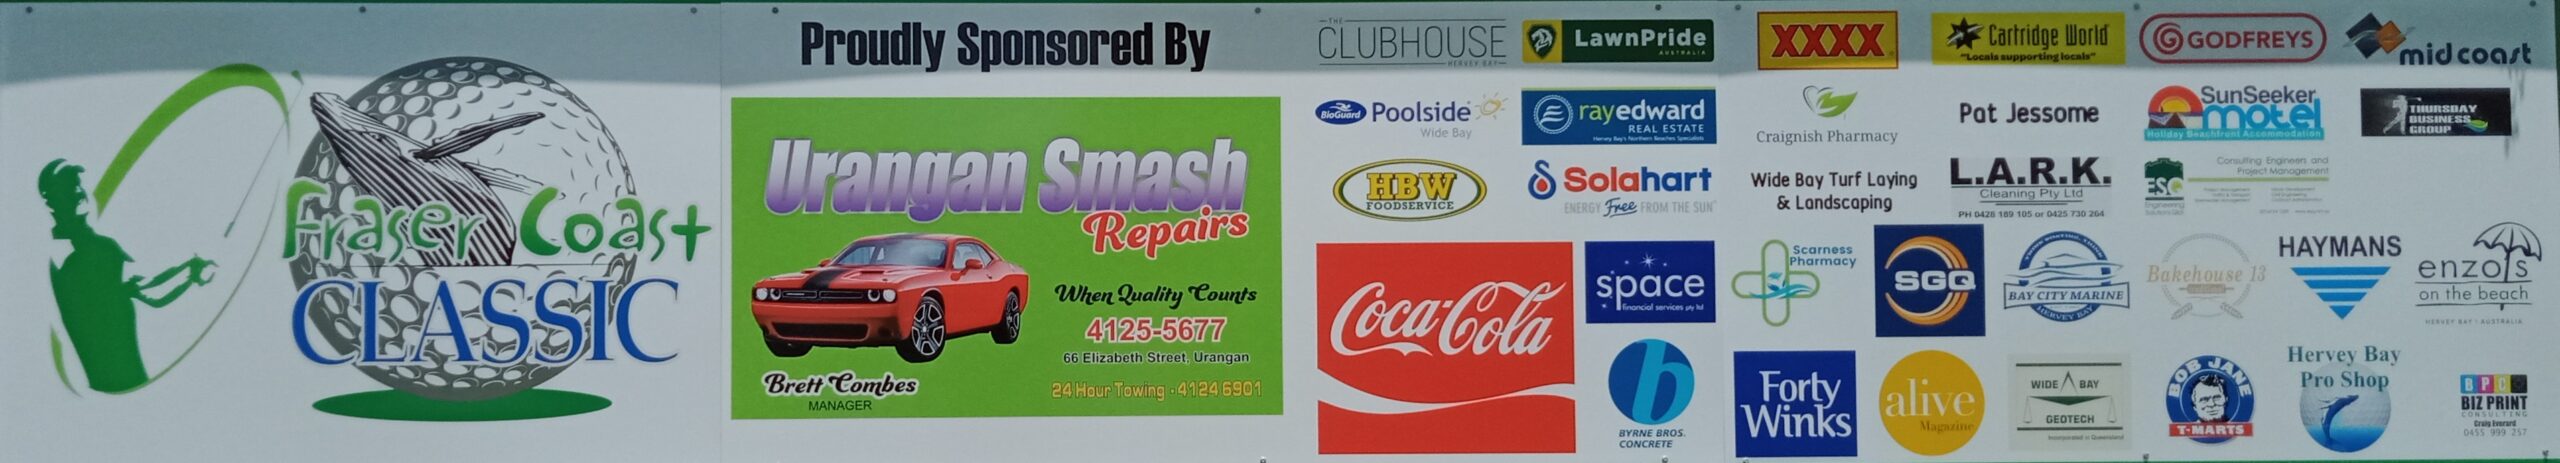 Fraser Coast Classic sponsors